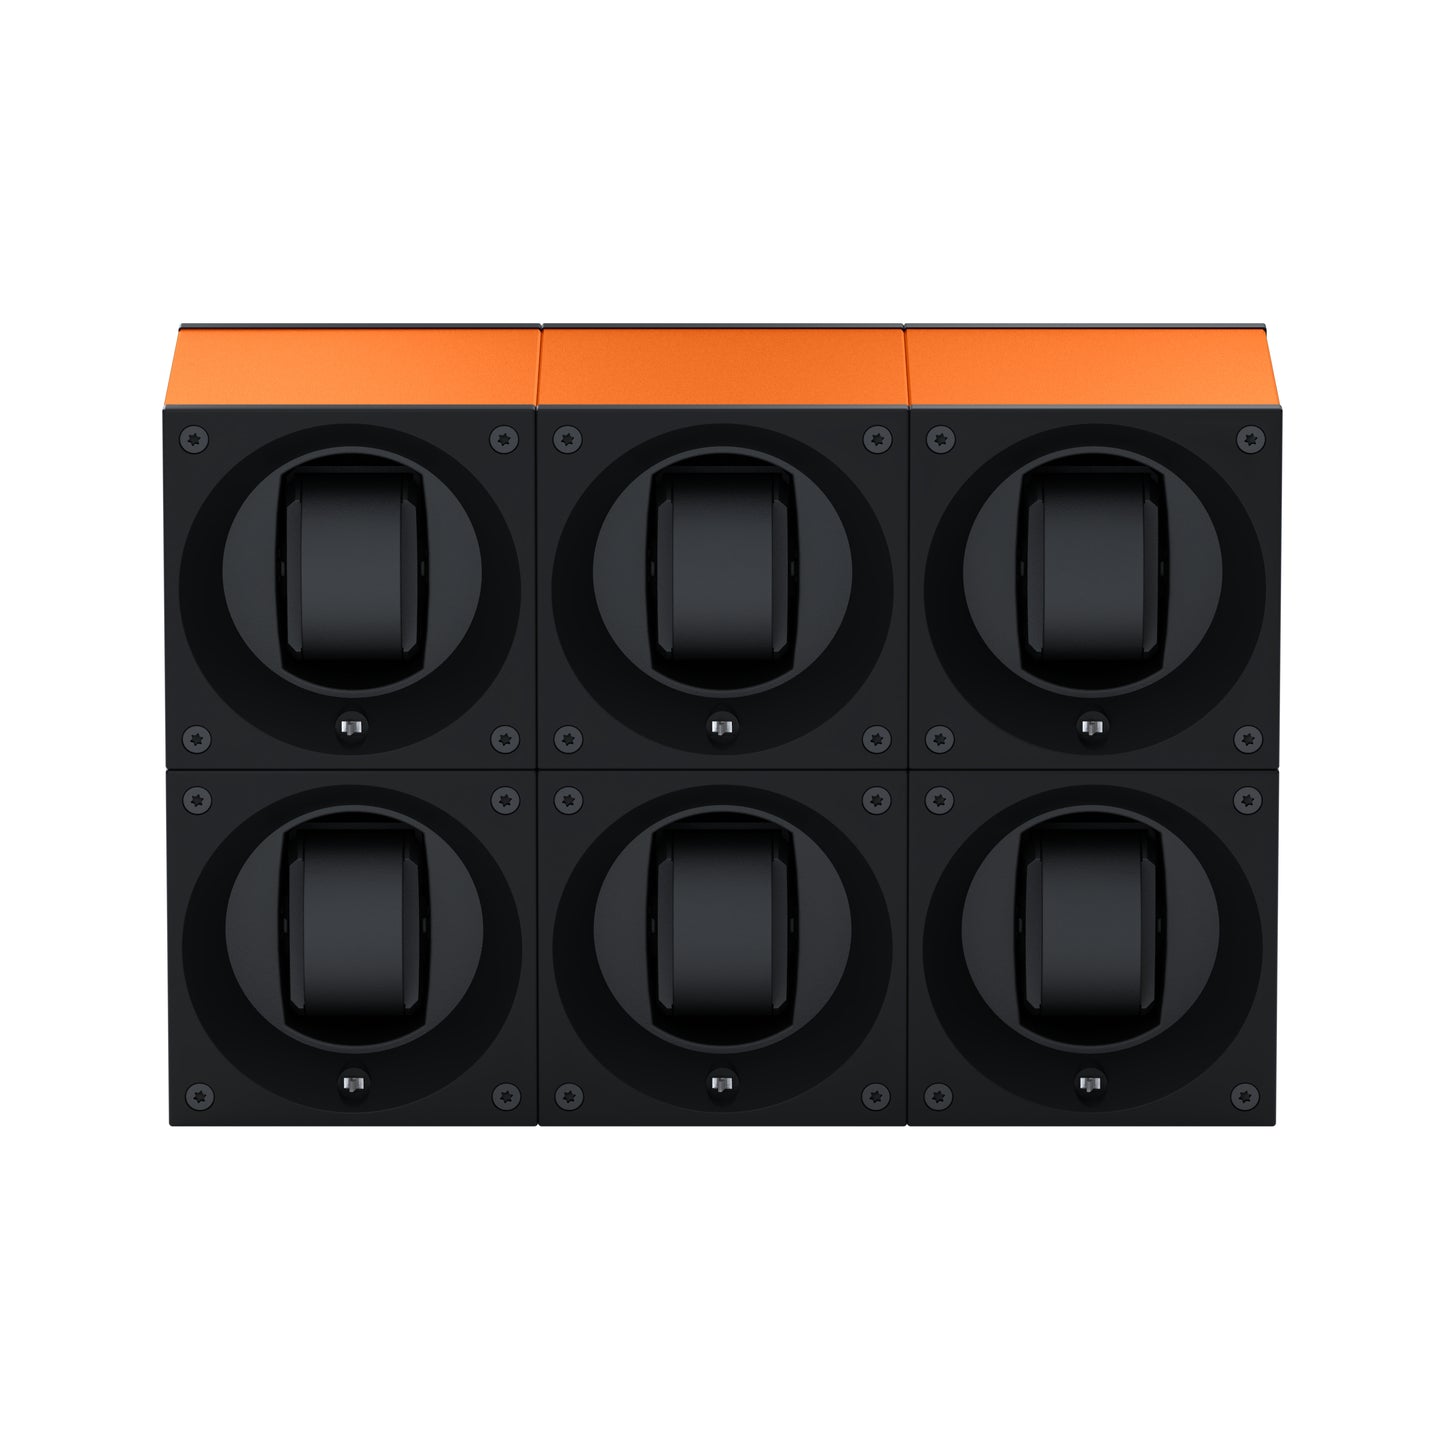 Masterbox 6 montres Aluminium Orange : écrin rotatif pour montre automatique